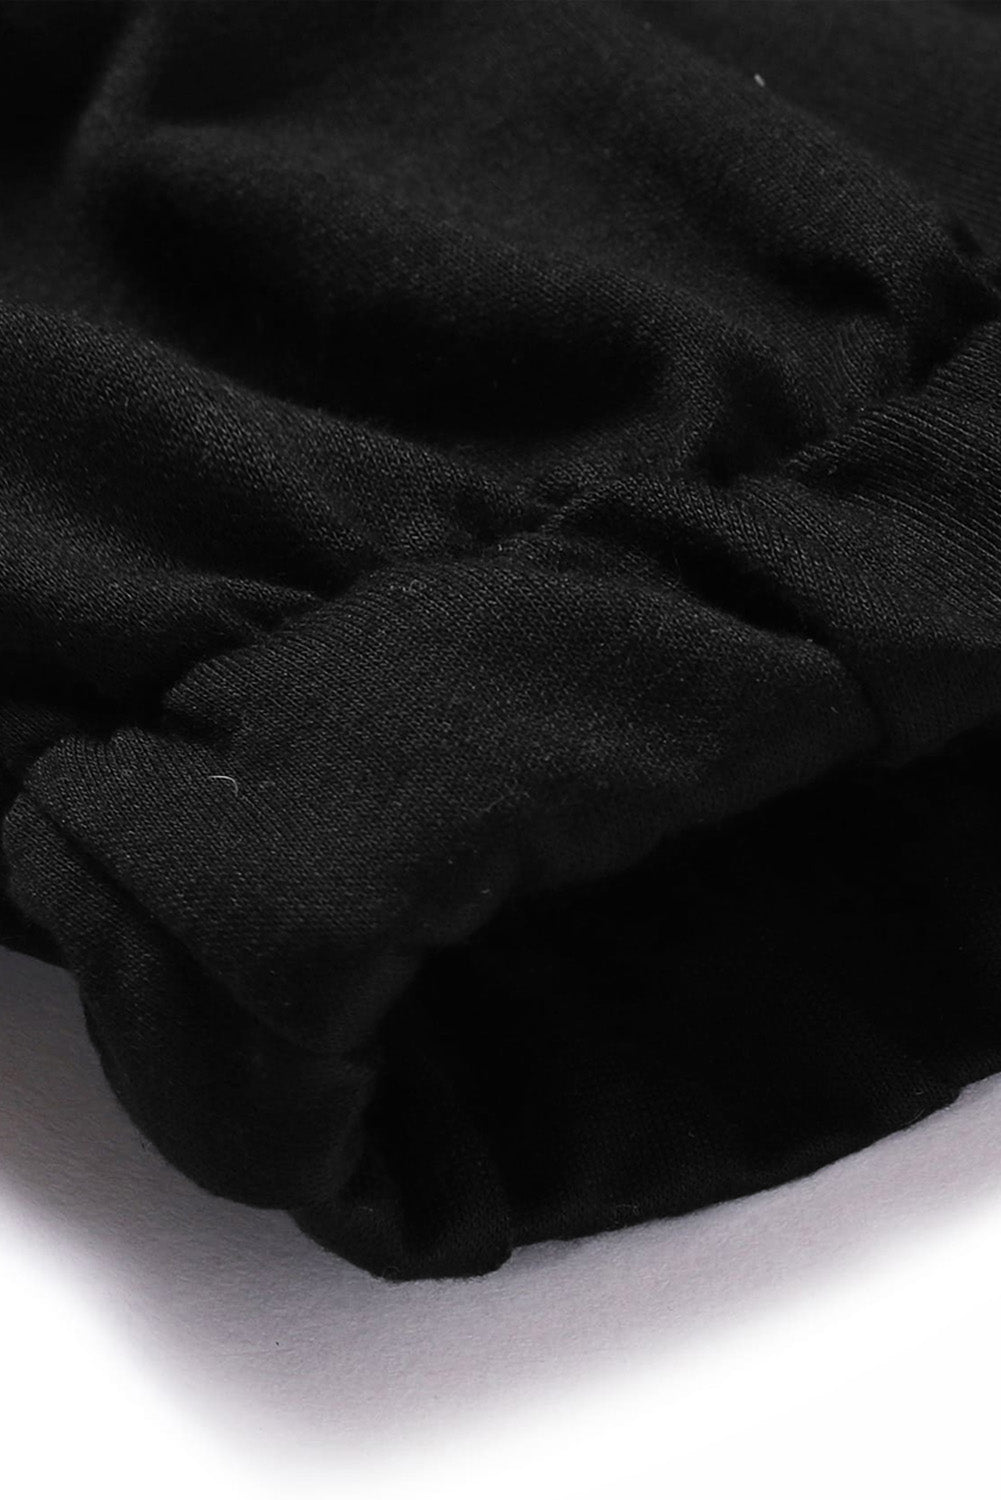 Black Letter Claw Print Drawstring Waist Men's Sweatpants Men's Pants JT's Designer Fashion